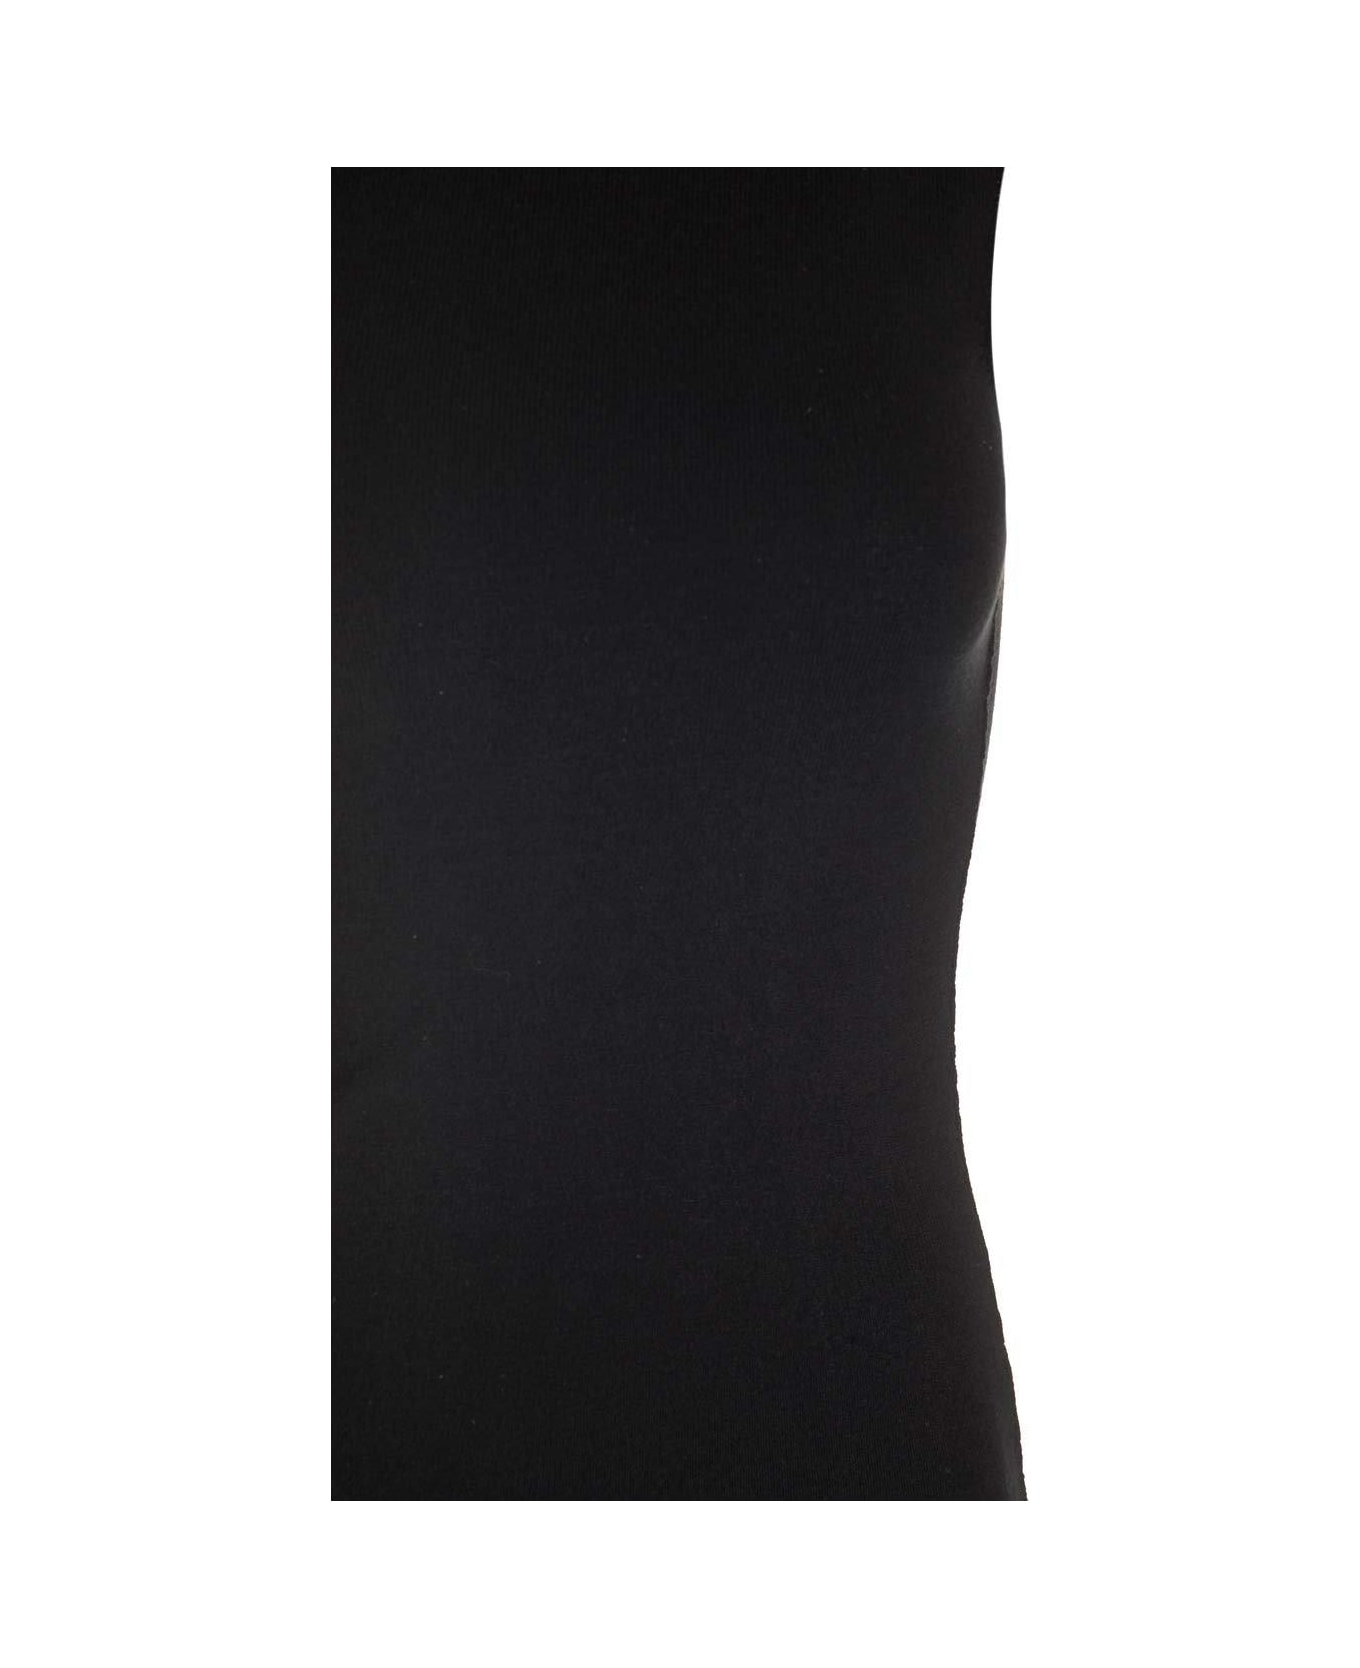 Rick Owens Asymmetric Midi Dress - Black